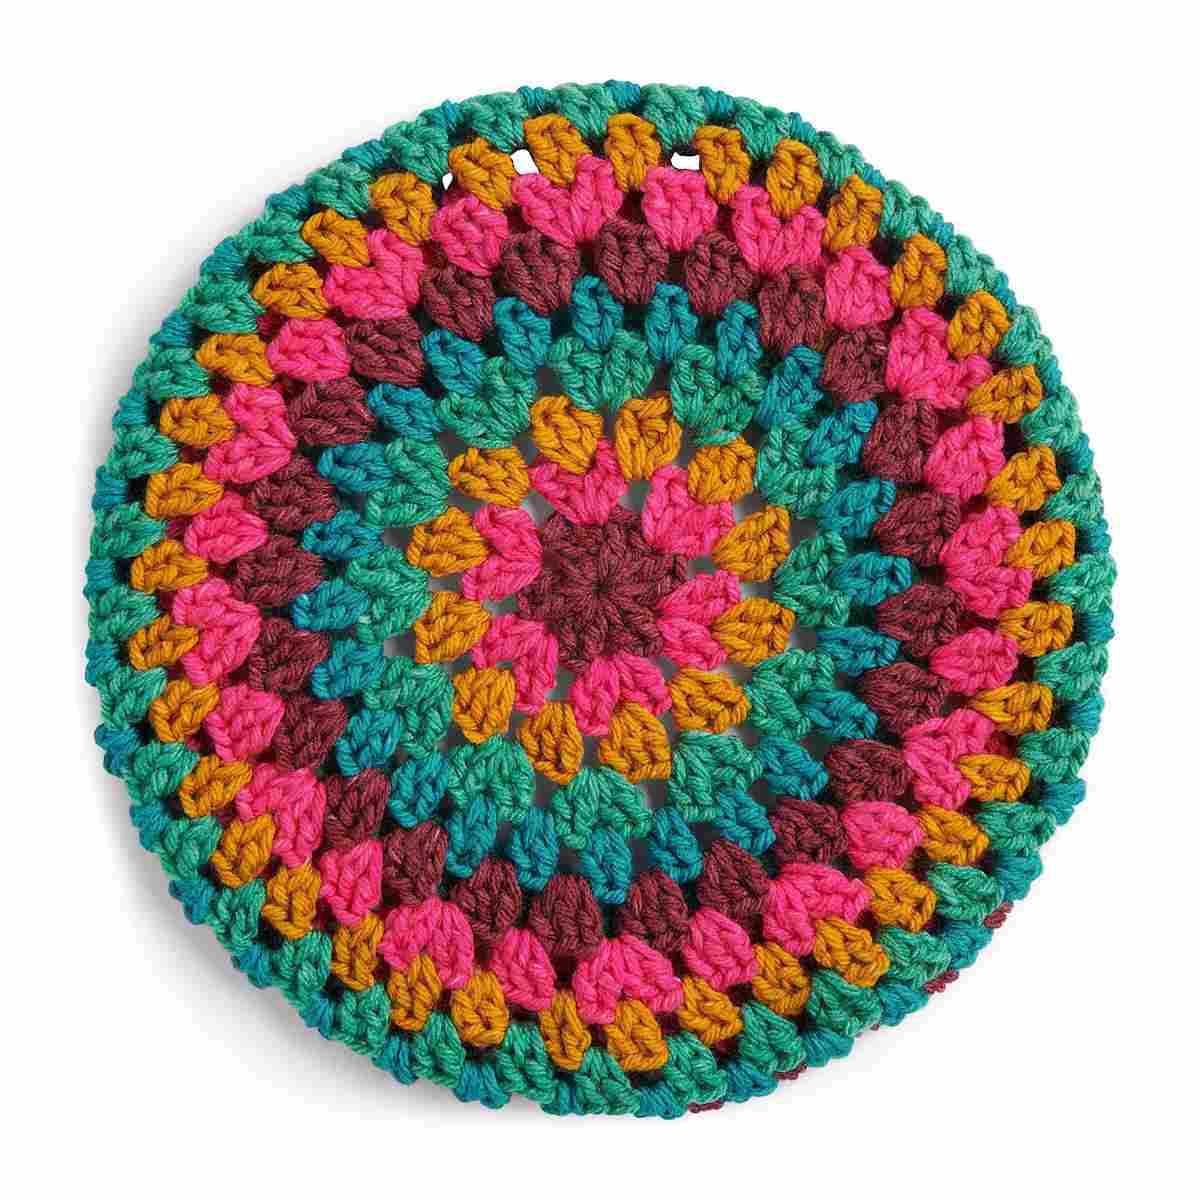 Crochet Granny Square Beret - Free Crochet Pattern